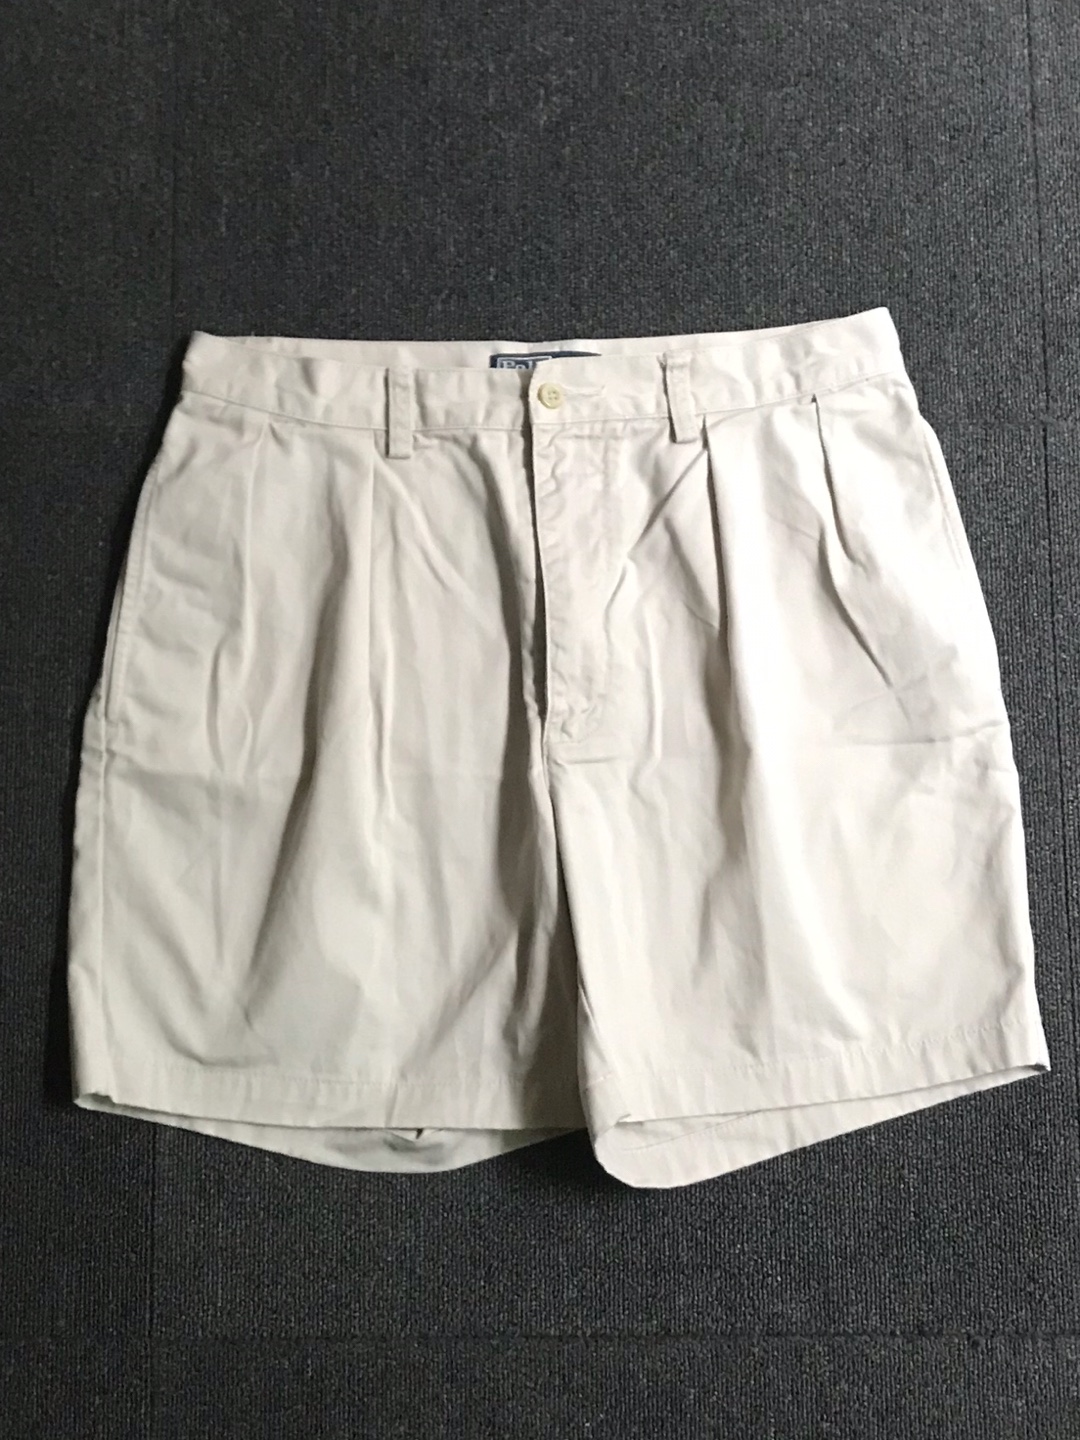 Polo RL 2tuck chino shorts (32 size, ~32인치 추천)